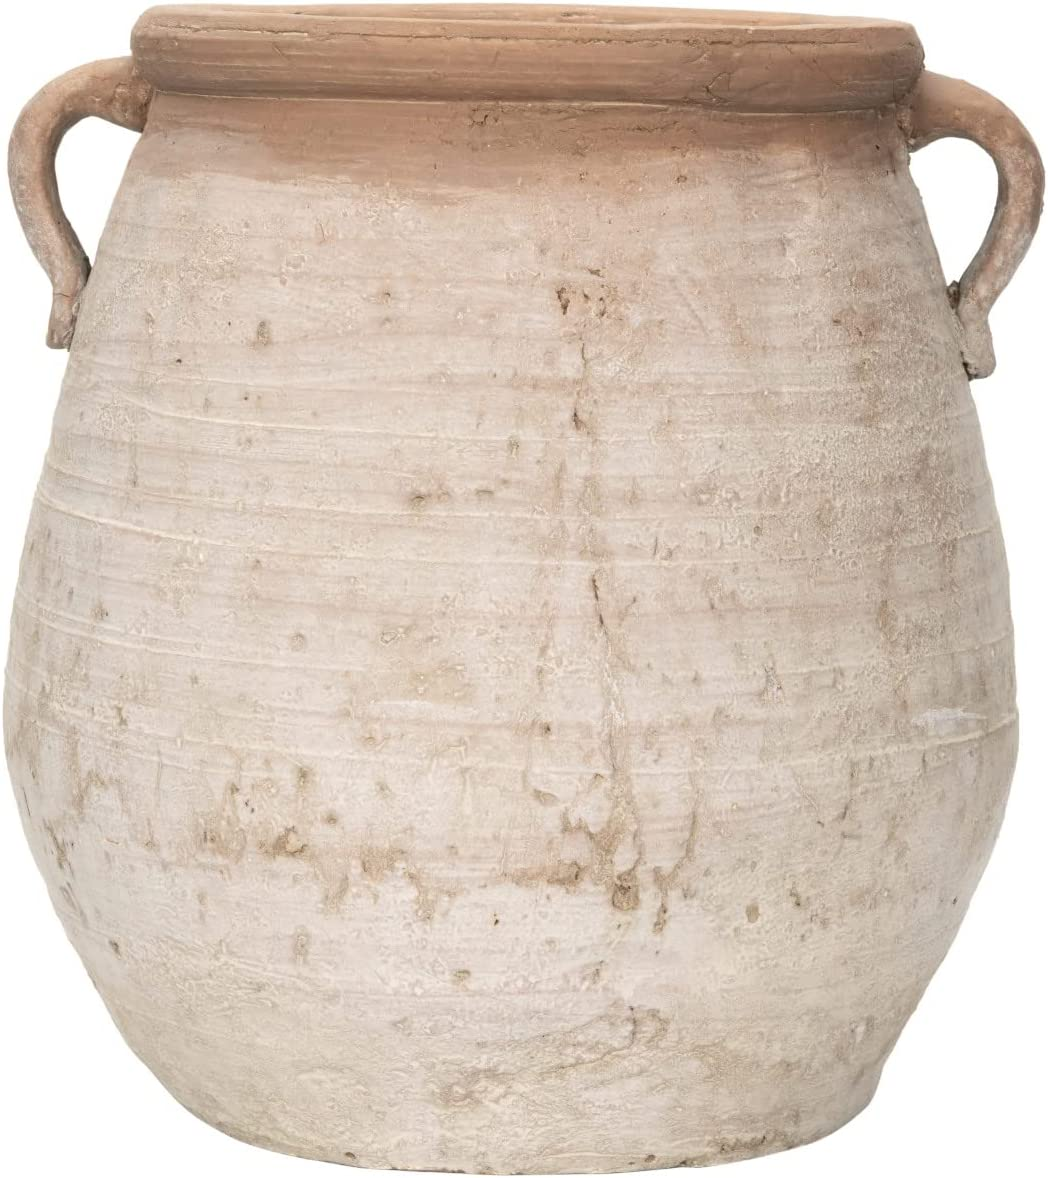 Whitewashed terracotta urn